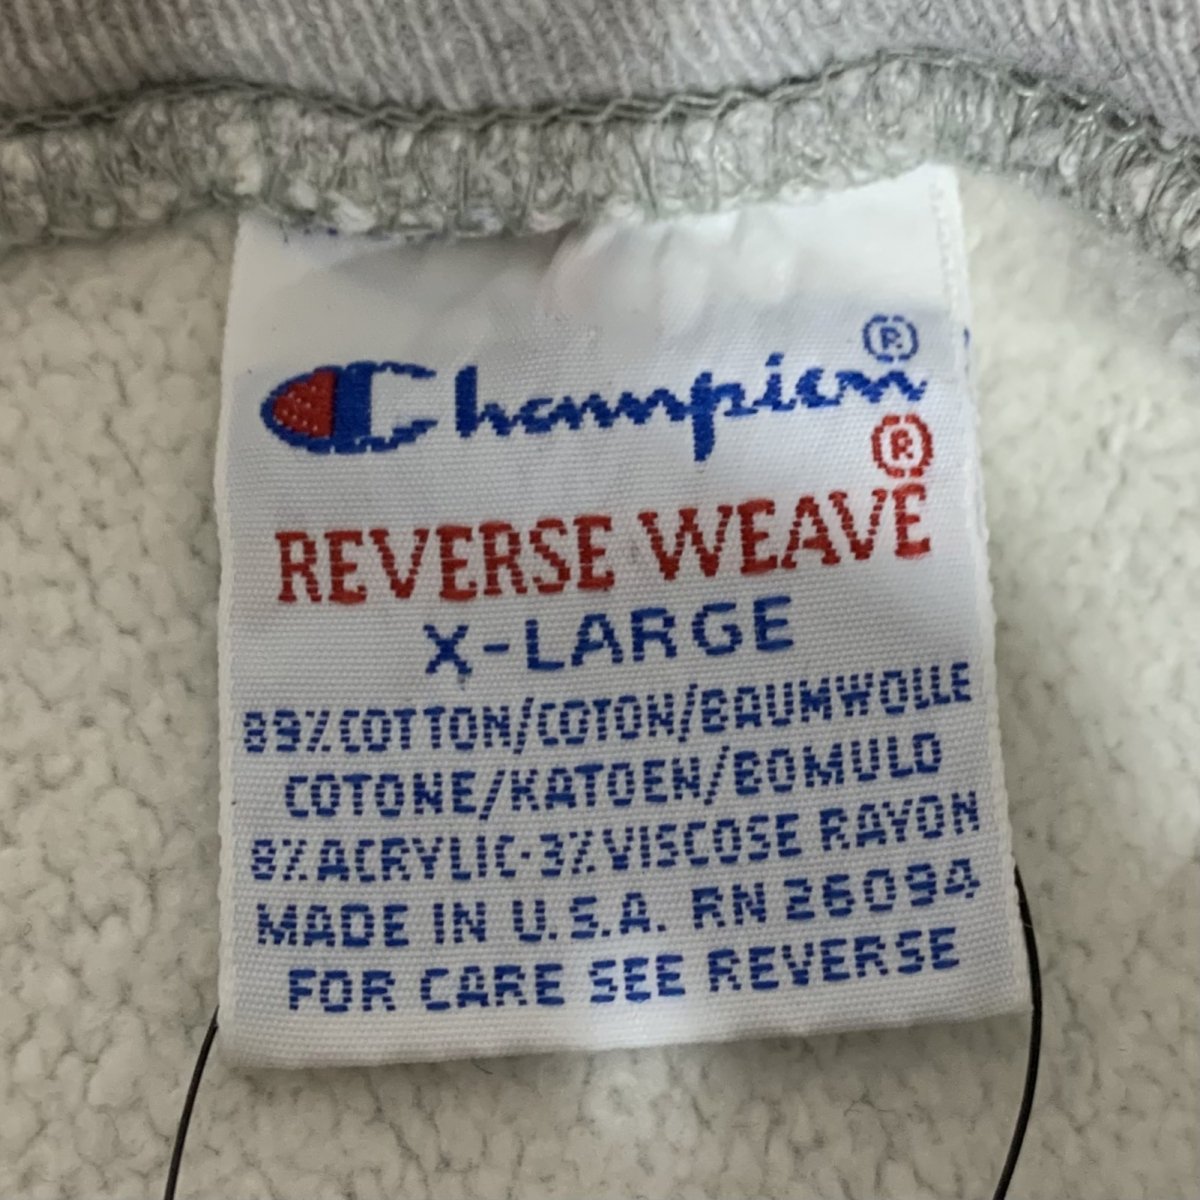 USA製 90s Champion R/W Sweatshirt 